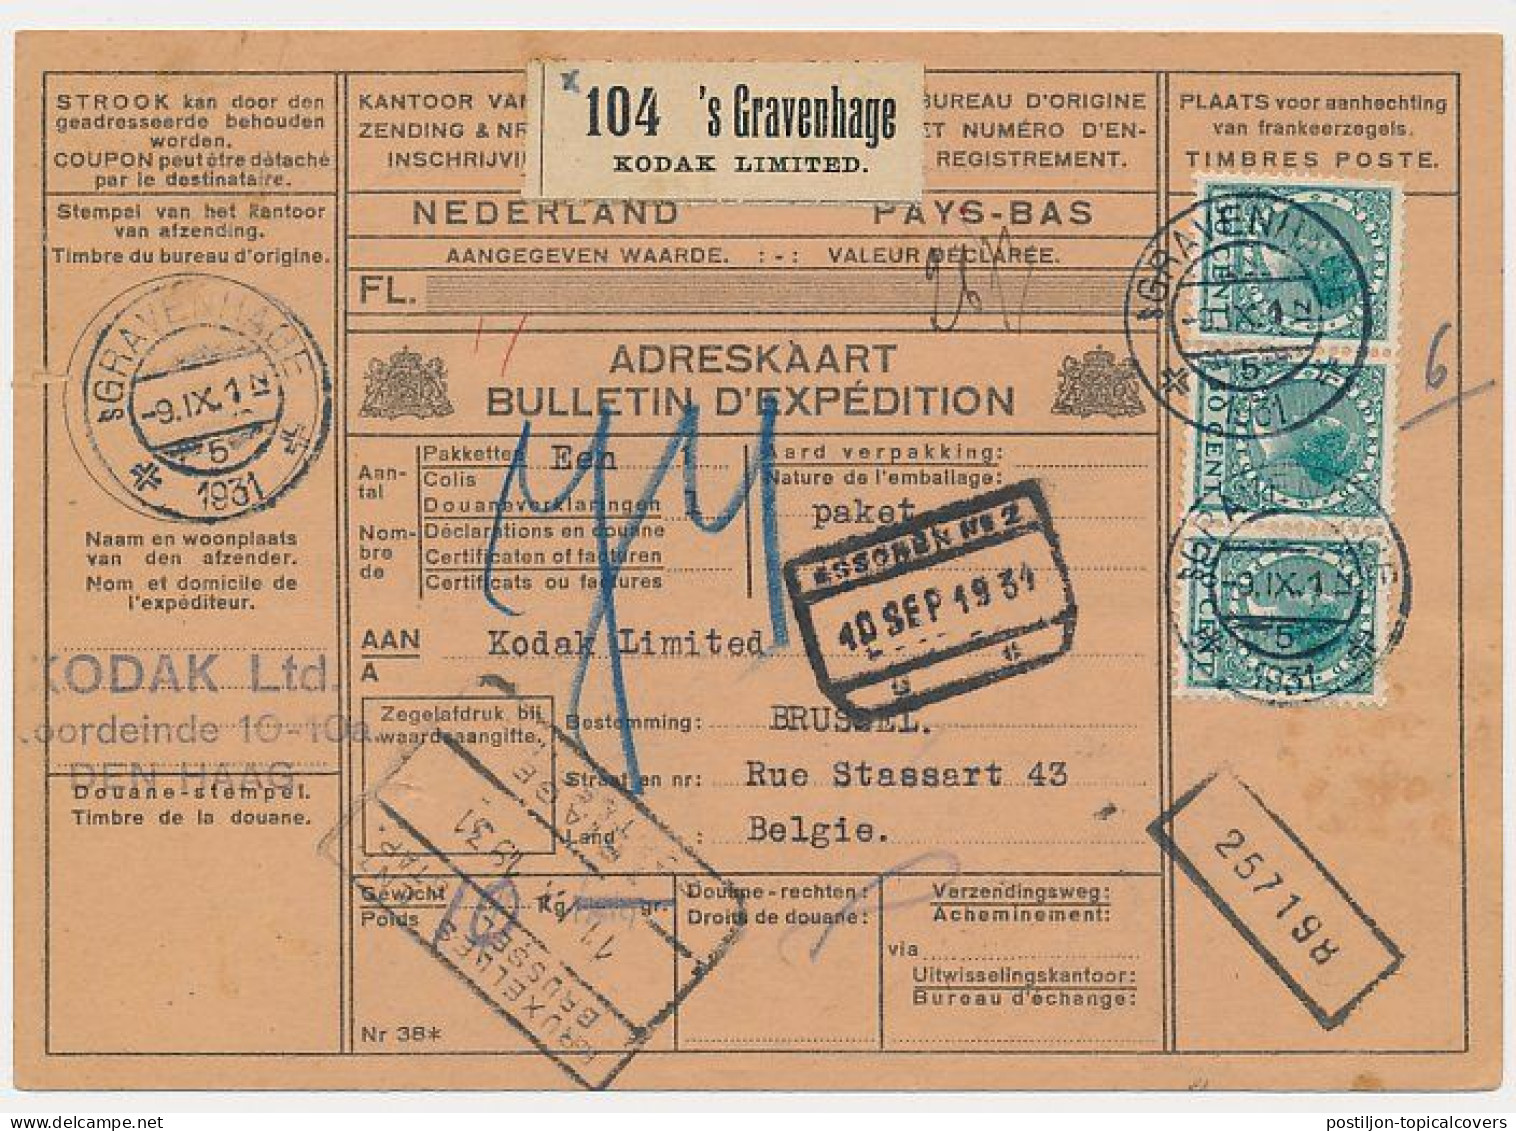 KODAK LIMITED - Rare Private Postal Label - Address / Package Card The Netherlands 1931 - Photography - Fotografie